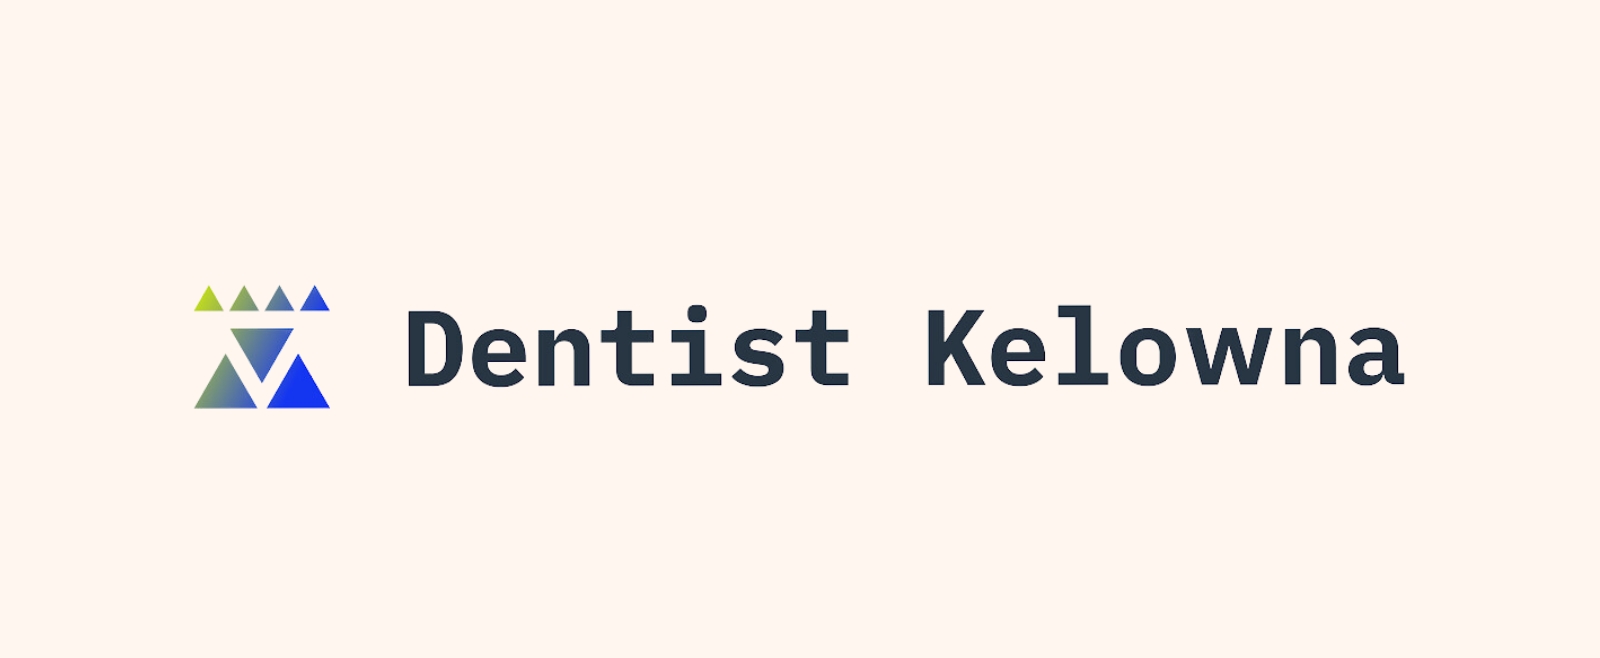 dentist-kelowna.com - Highest quality dental care to the Kelowna community